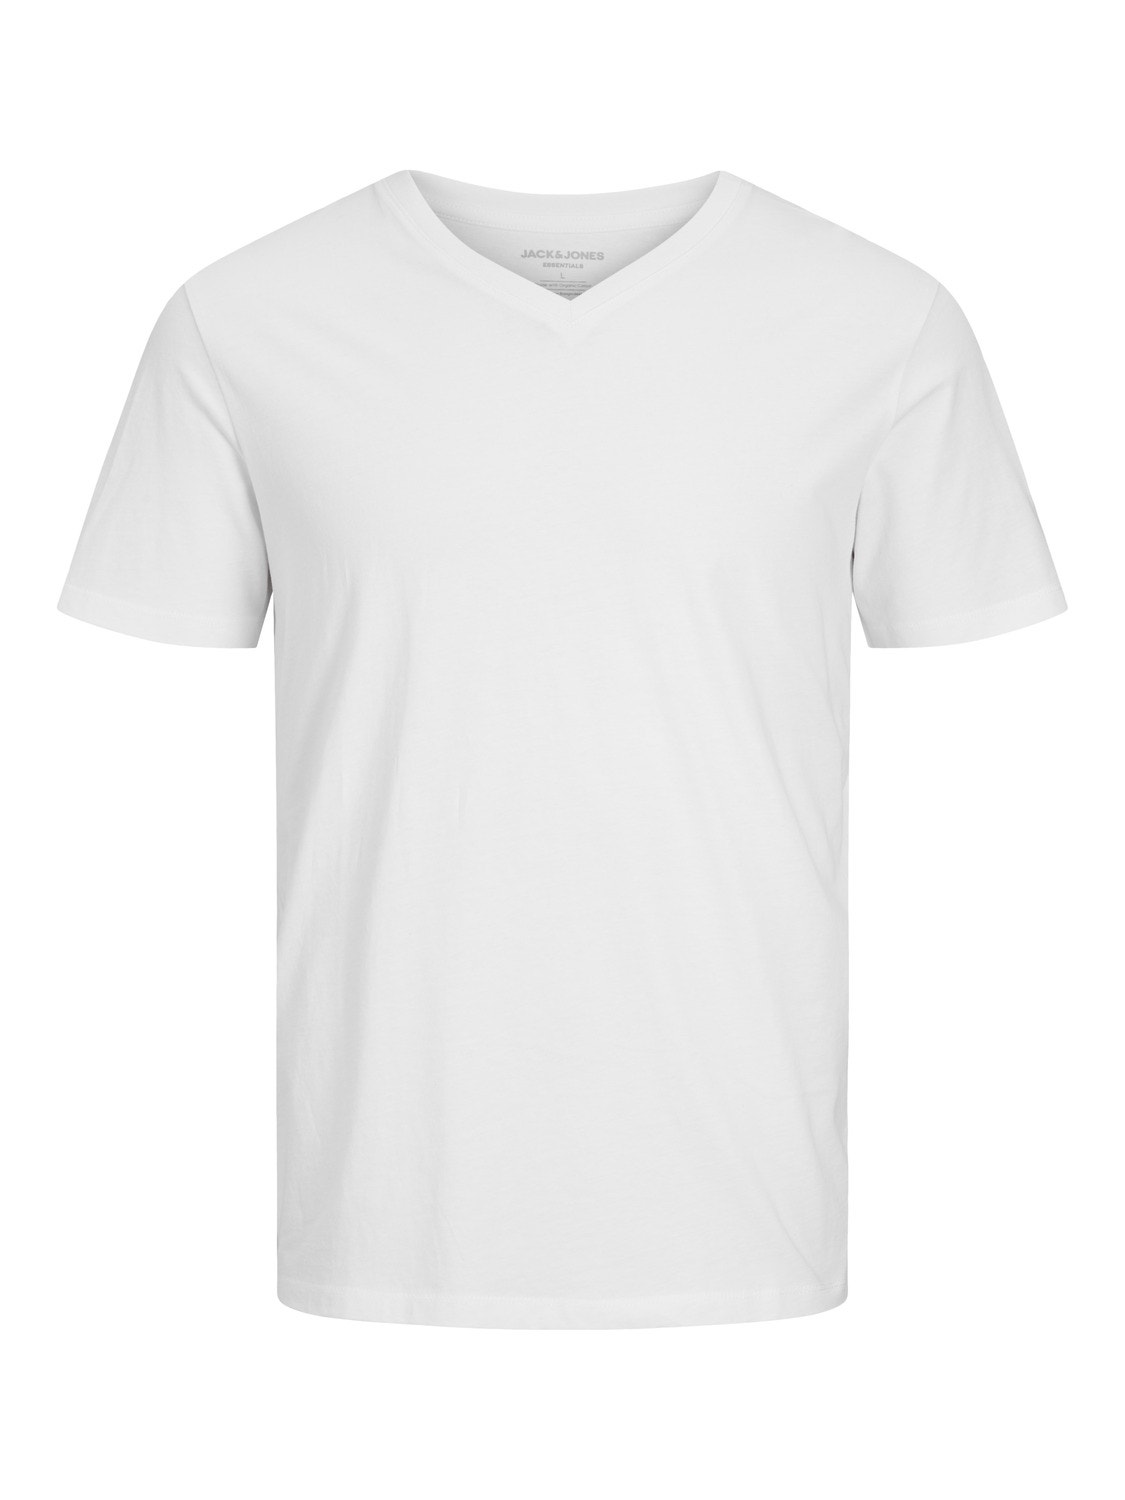 Jack & Jones T-shirt Semplice Scollo a V -White - 12156102